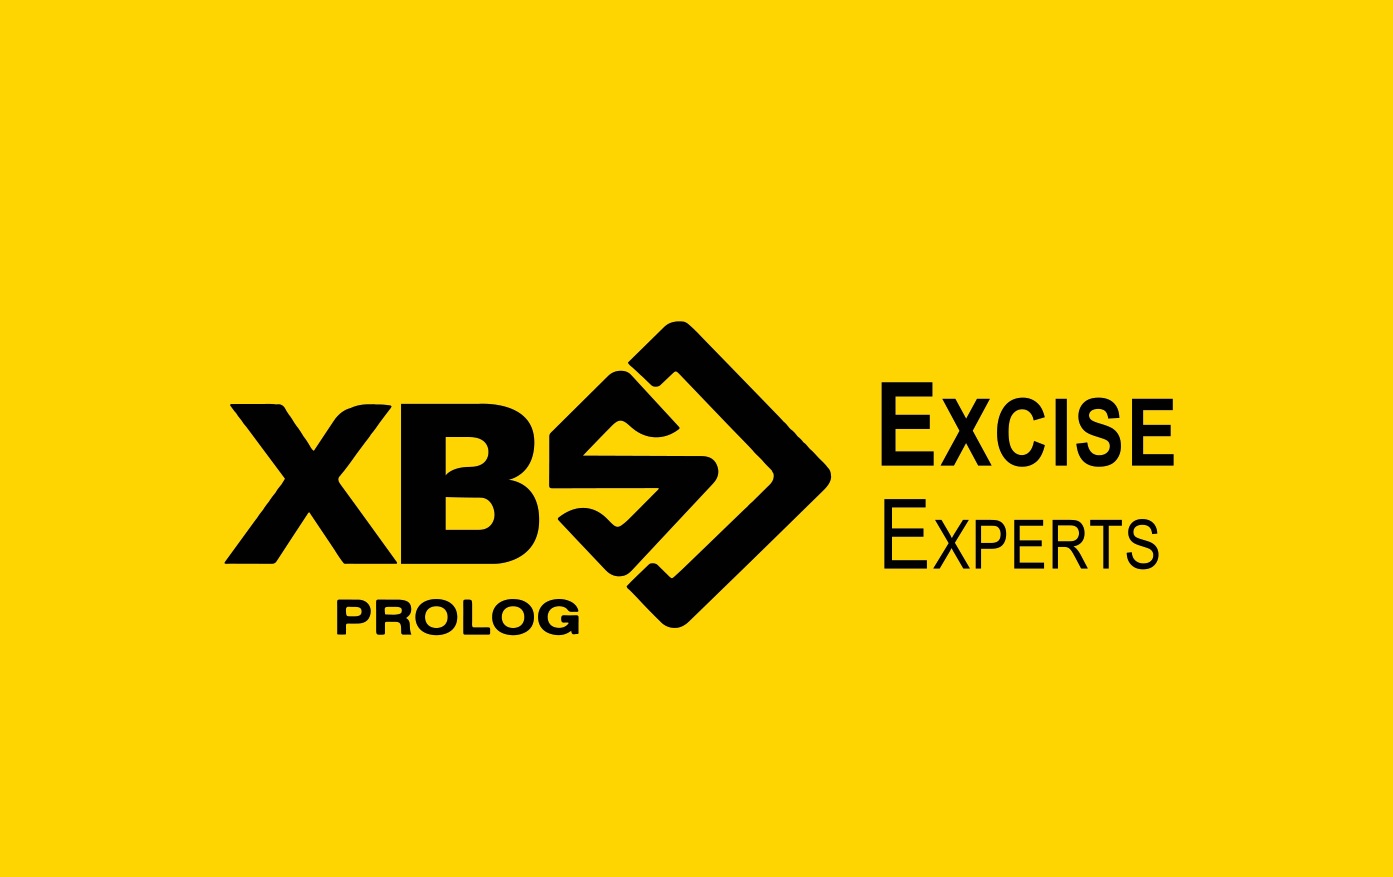 XBS PRO-LOG partnerem WLW!